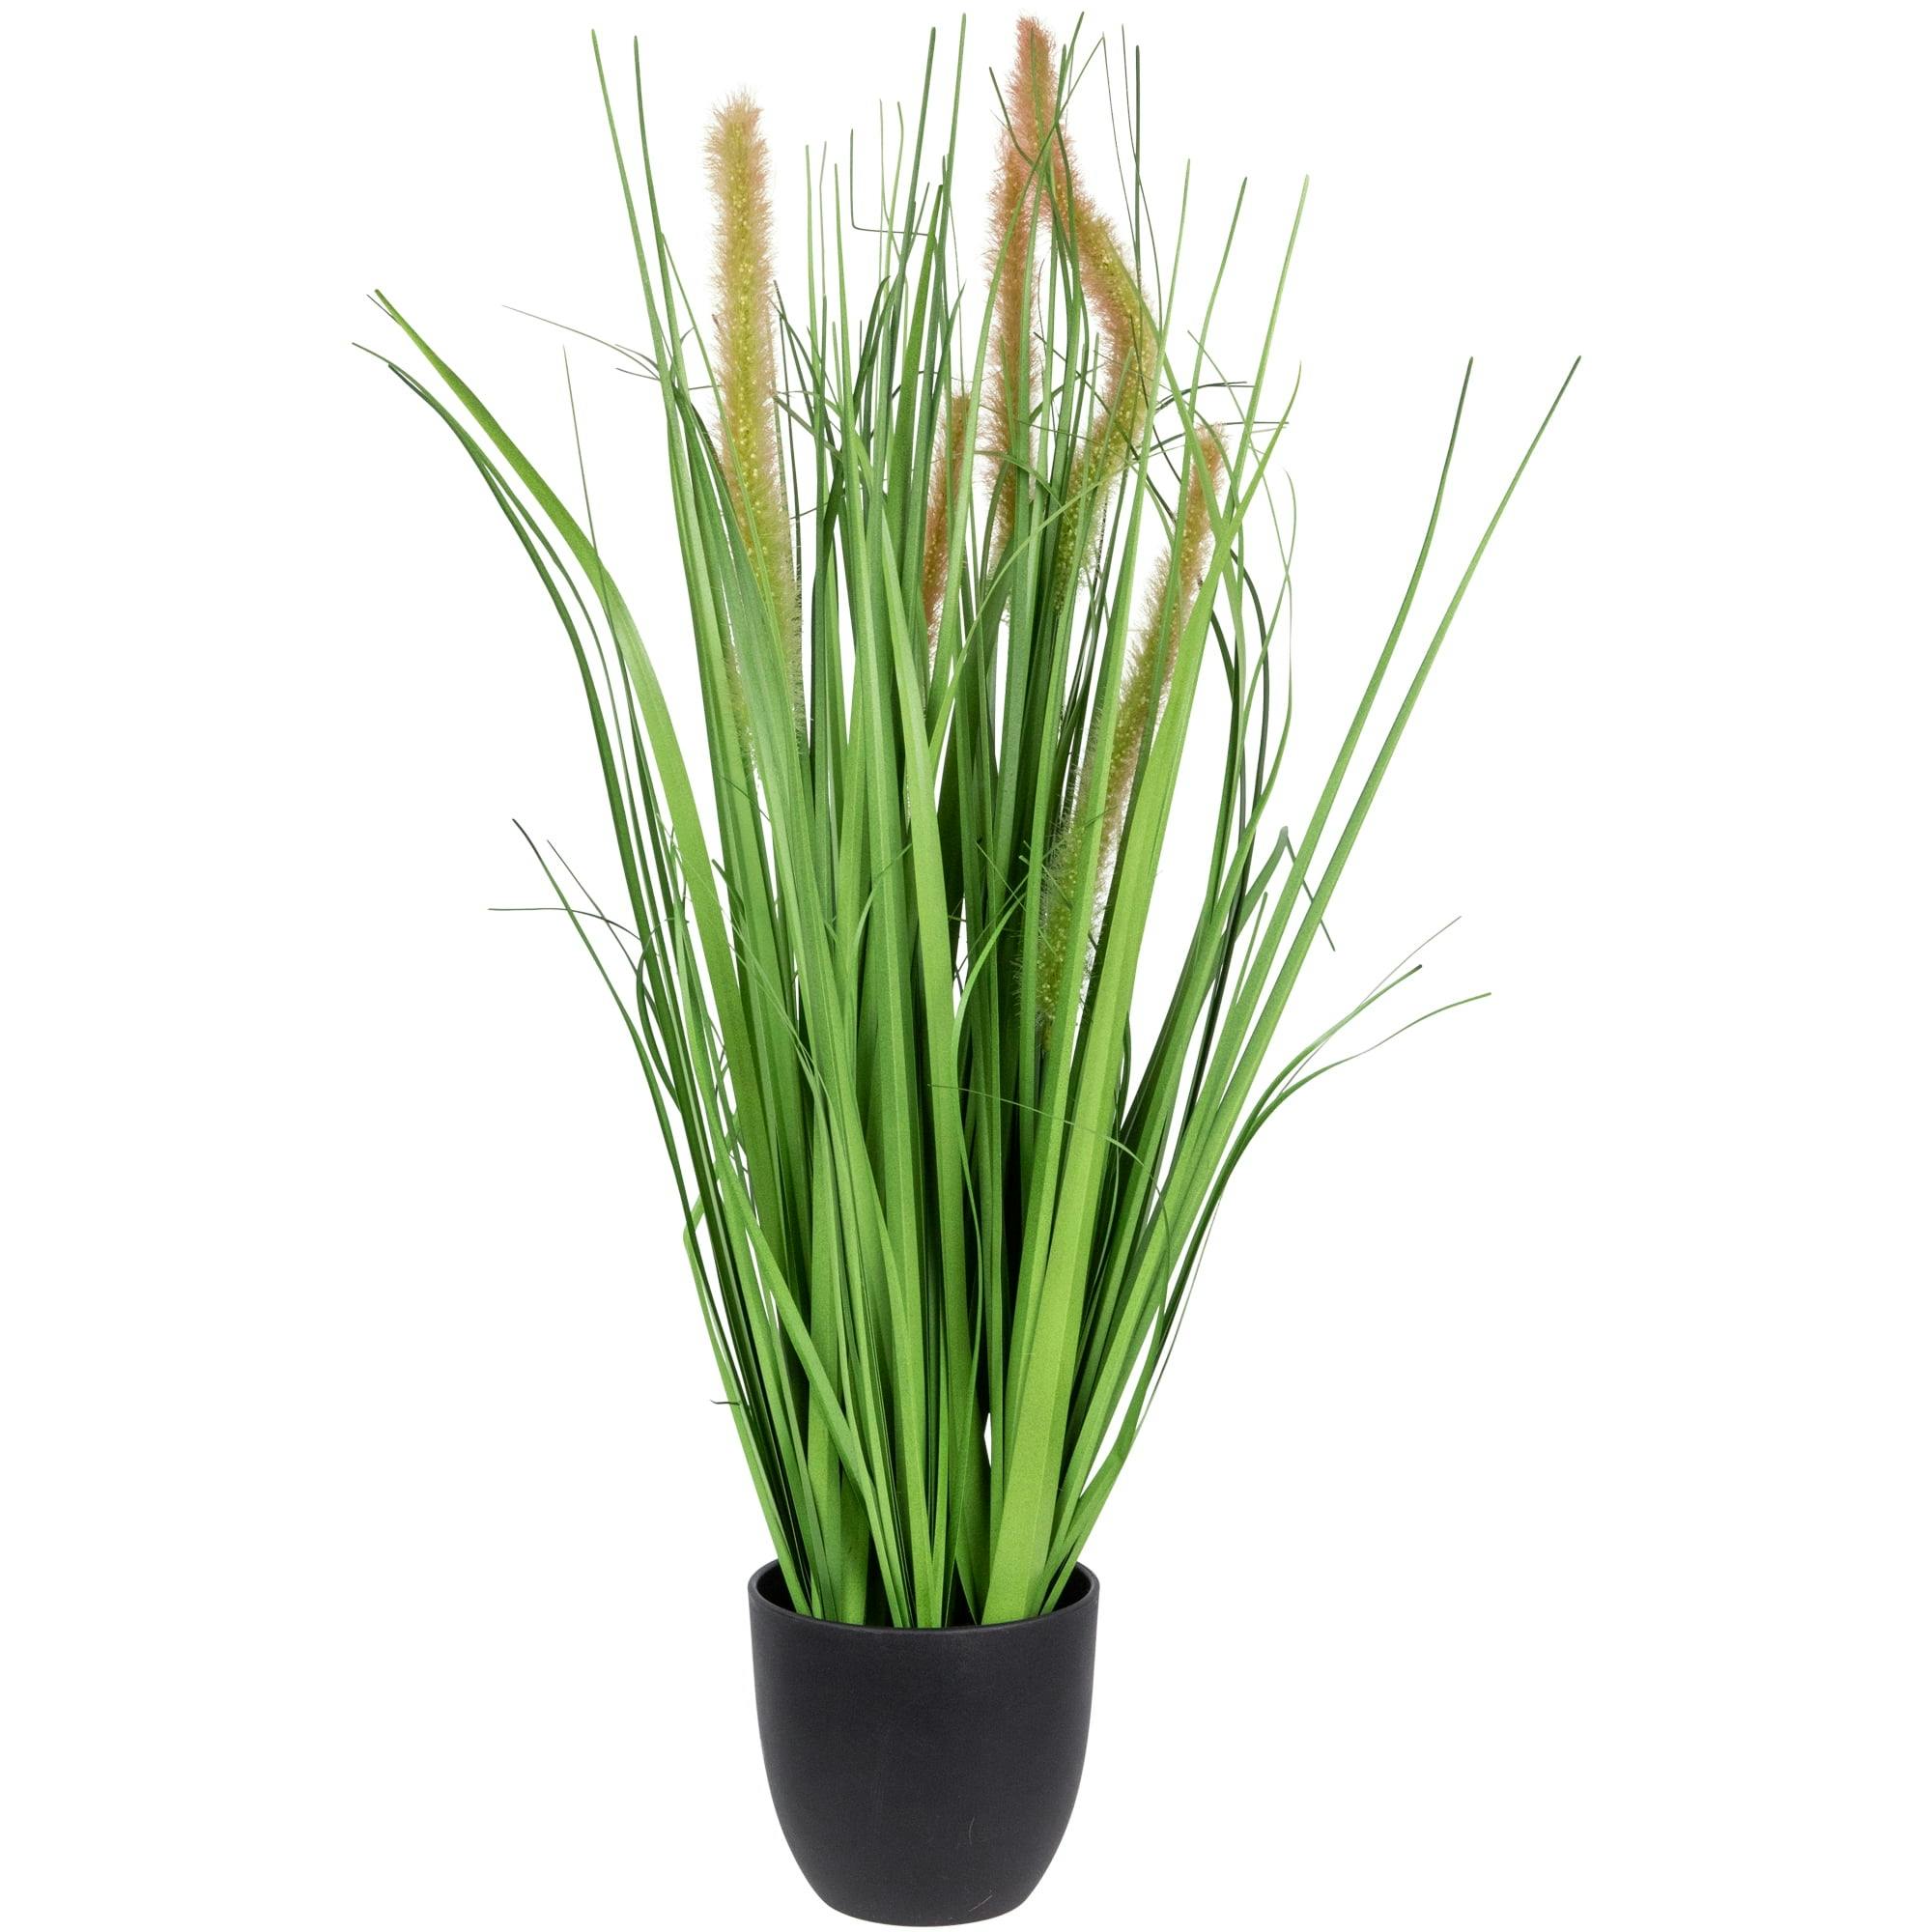 Lush Green 24" Artificial Onion Grass in Sleek Black Pot